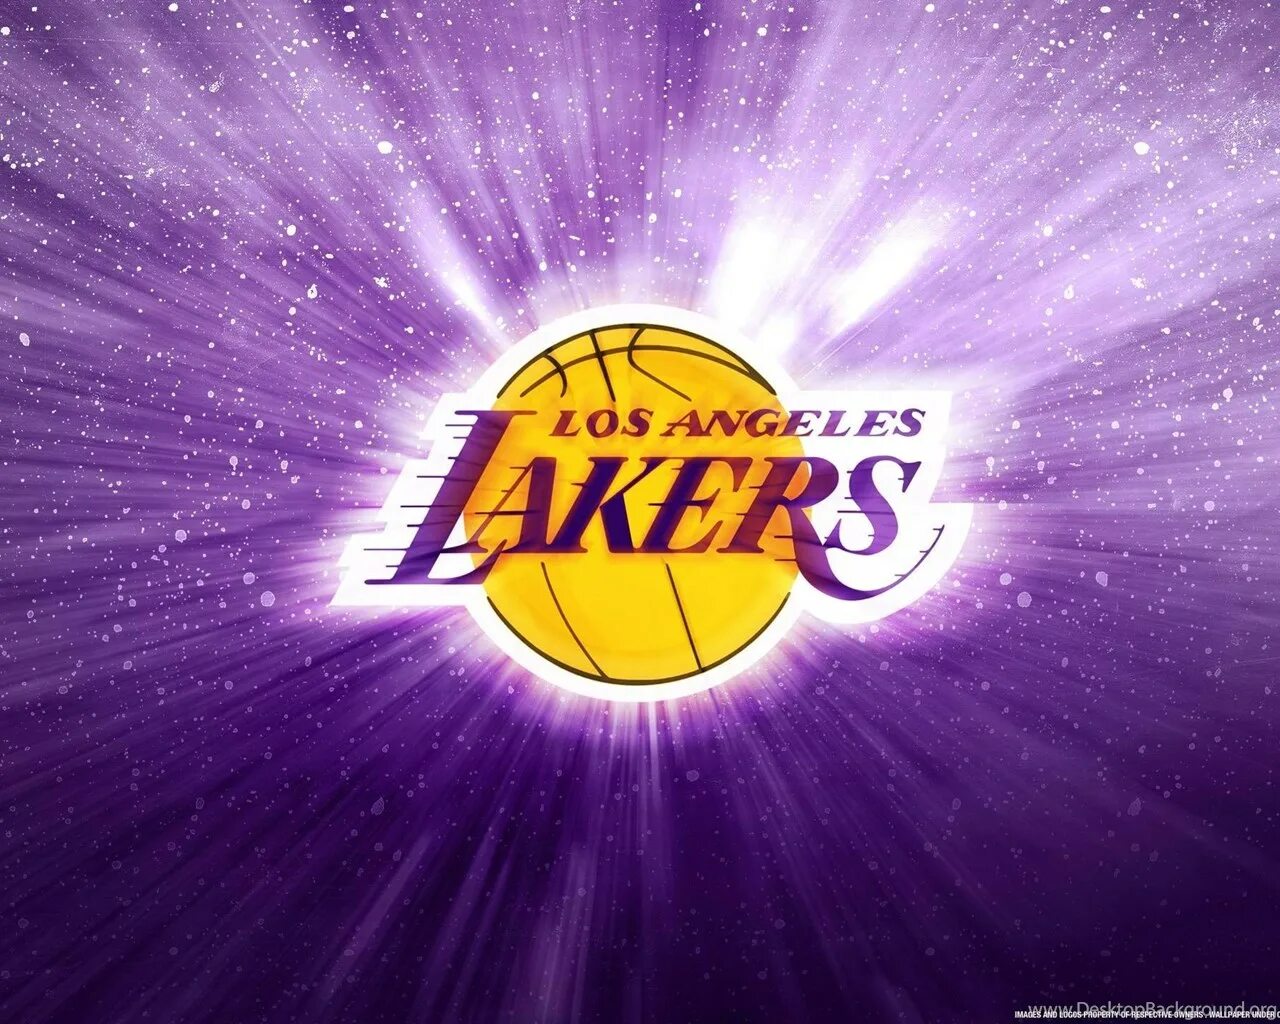 La lakers. Лос-Анджелес Лейкерс обои. Лейкерс логотип. Los Angeles Lakers. Лос Анджелес Лейкерс эмблема.